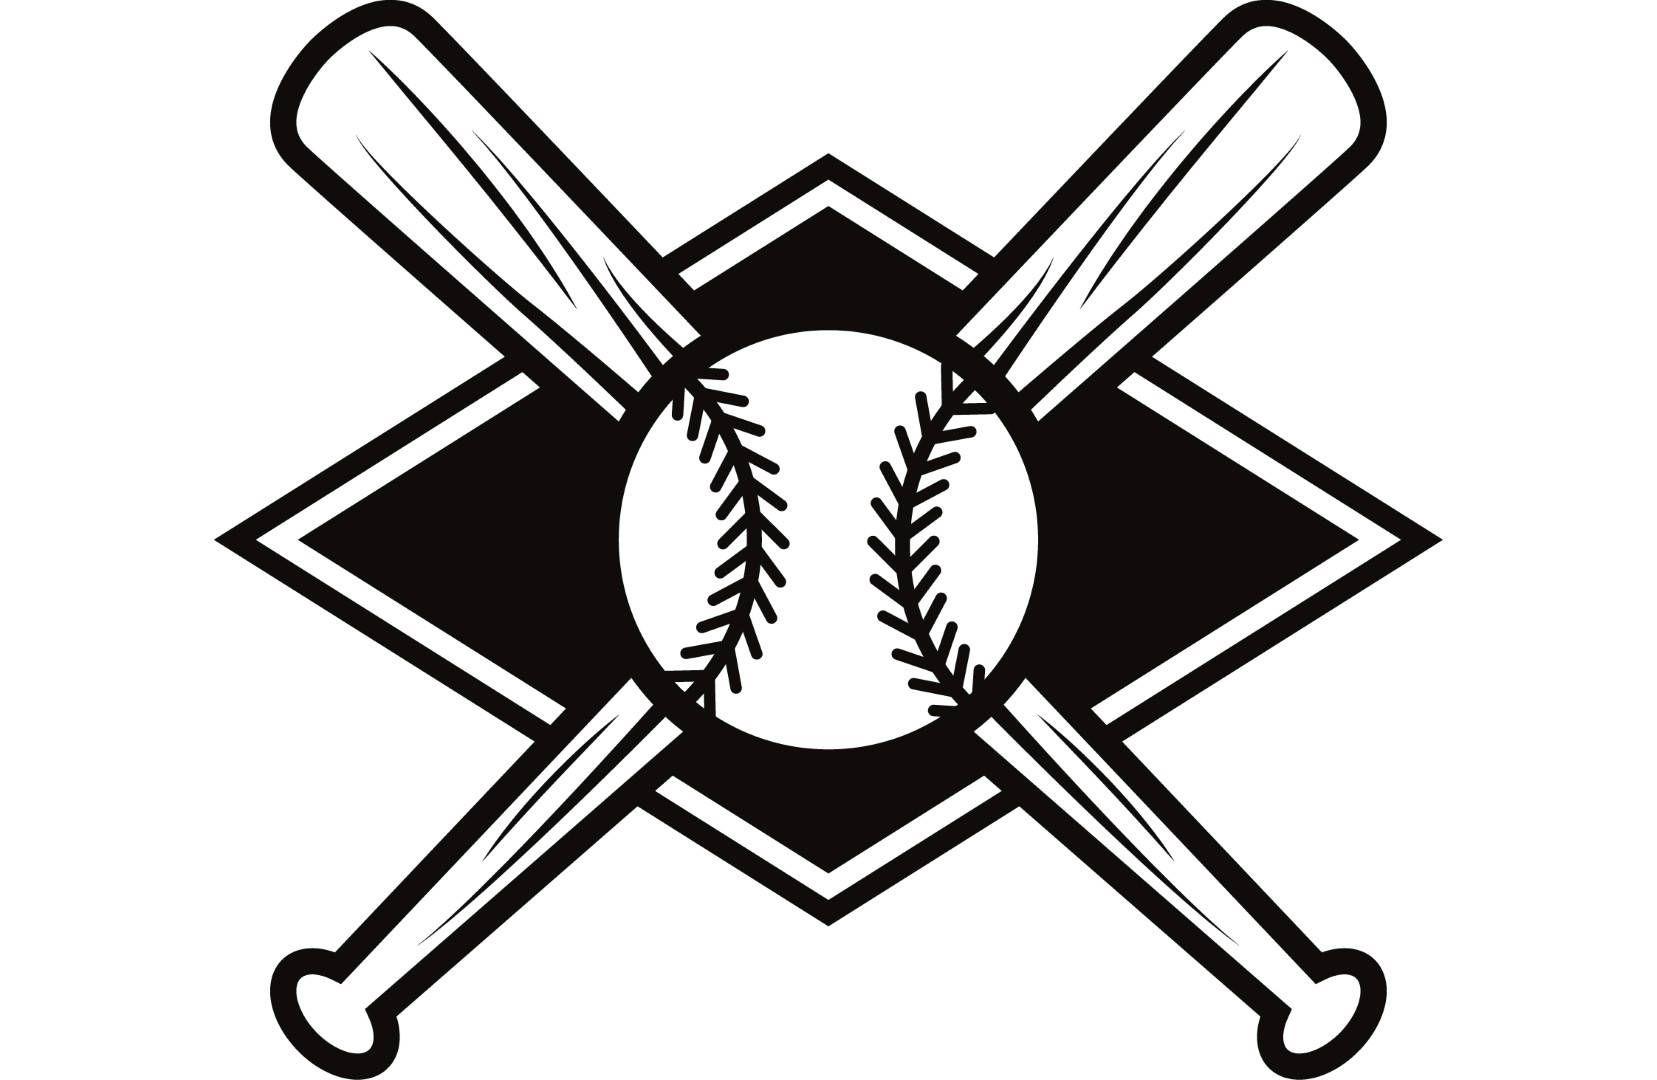 Ball Bat Logo - Baseball Logo 7 Bats Crossed Ball Diamond League Equipment | Etsy